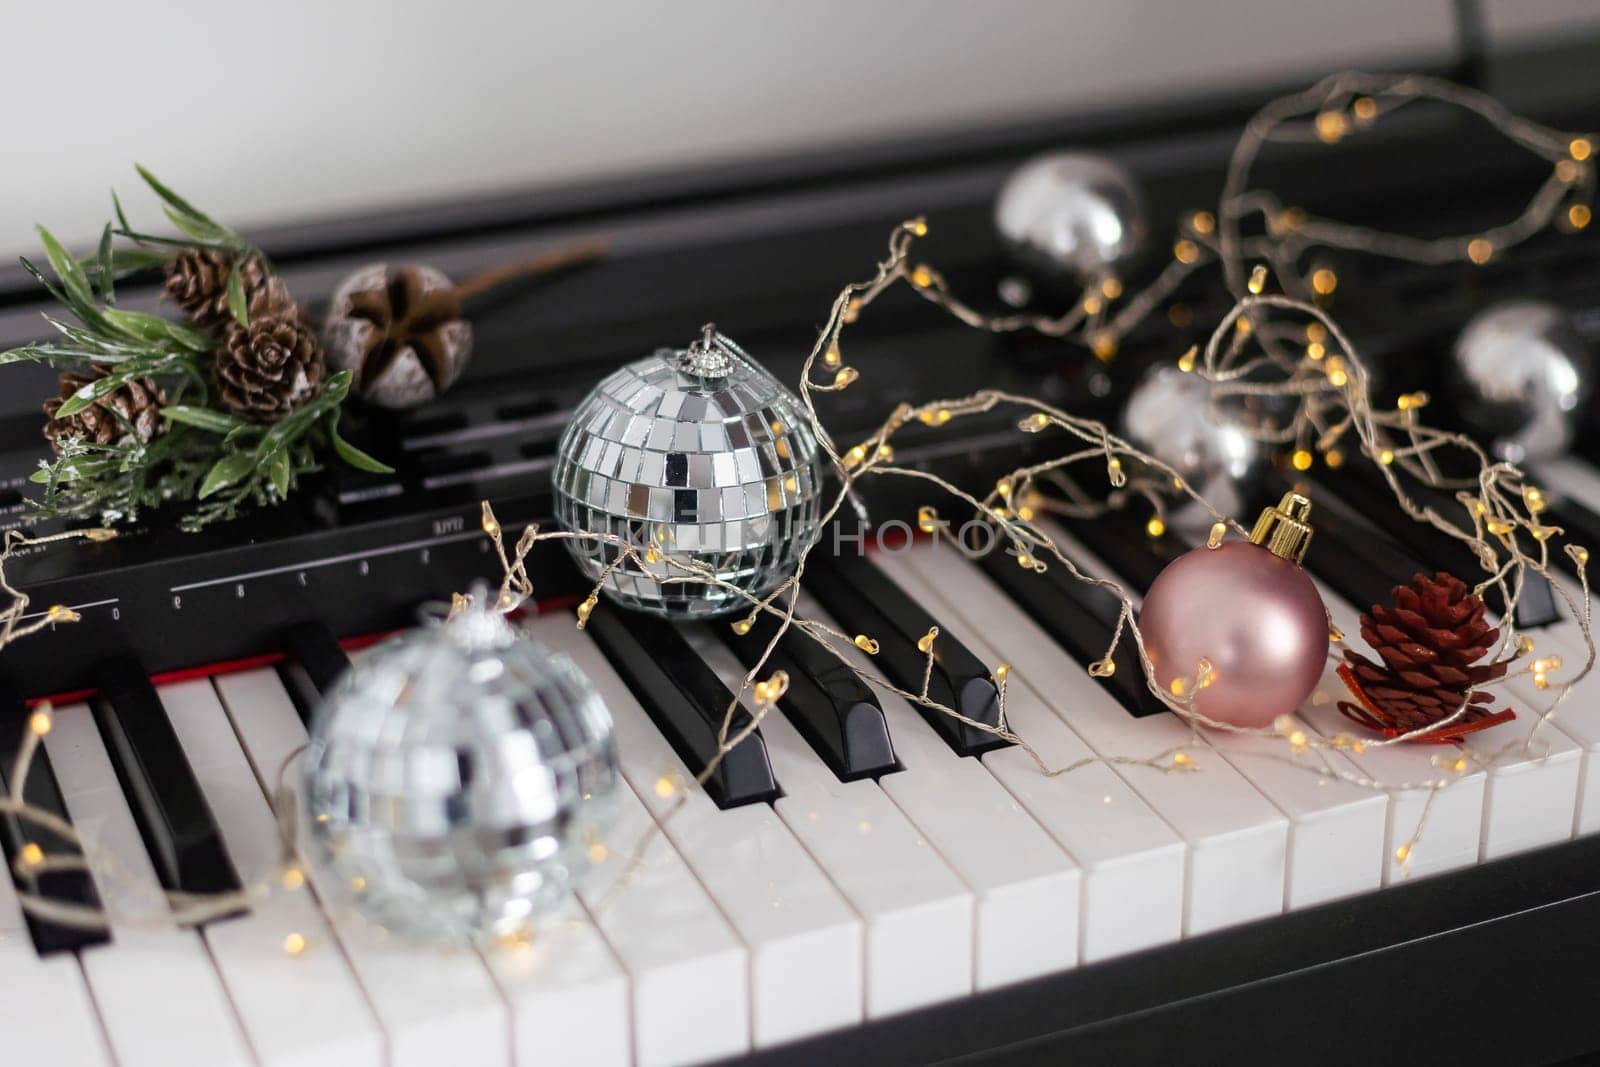 Piano keyboard with Christmas decoration, closeup